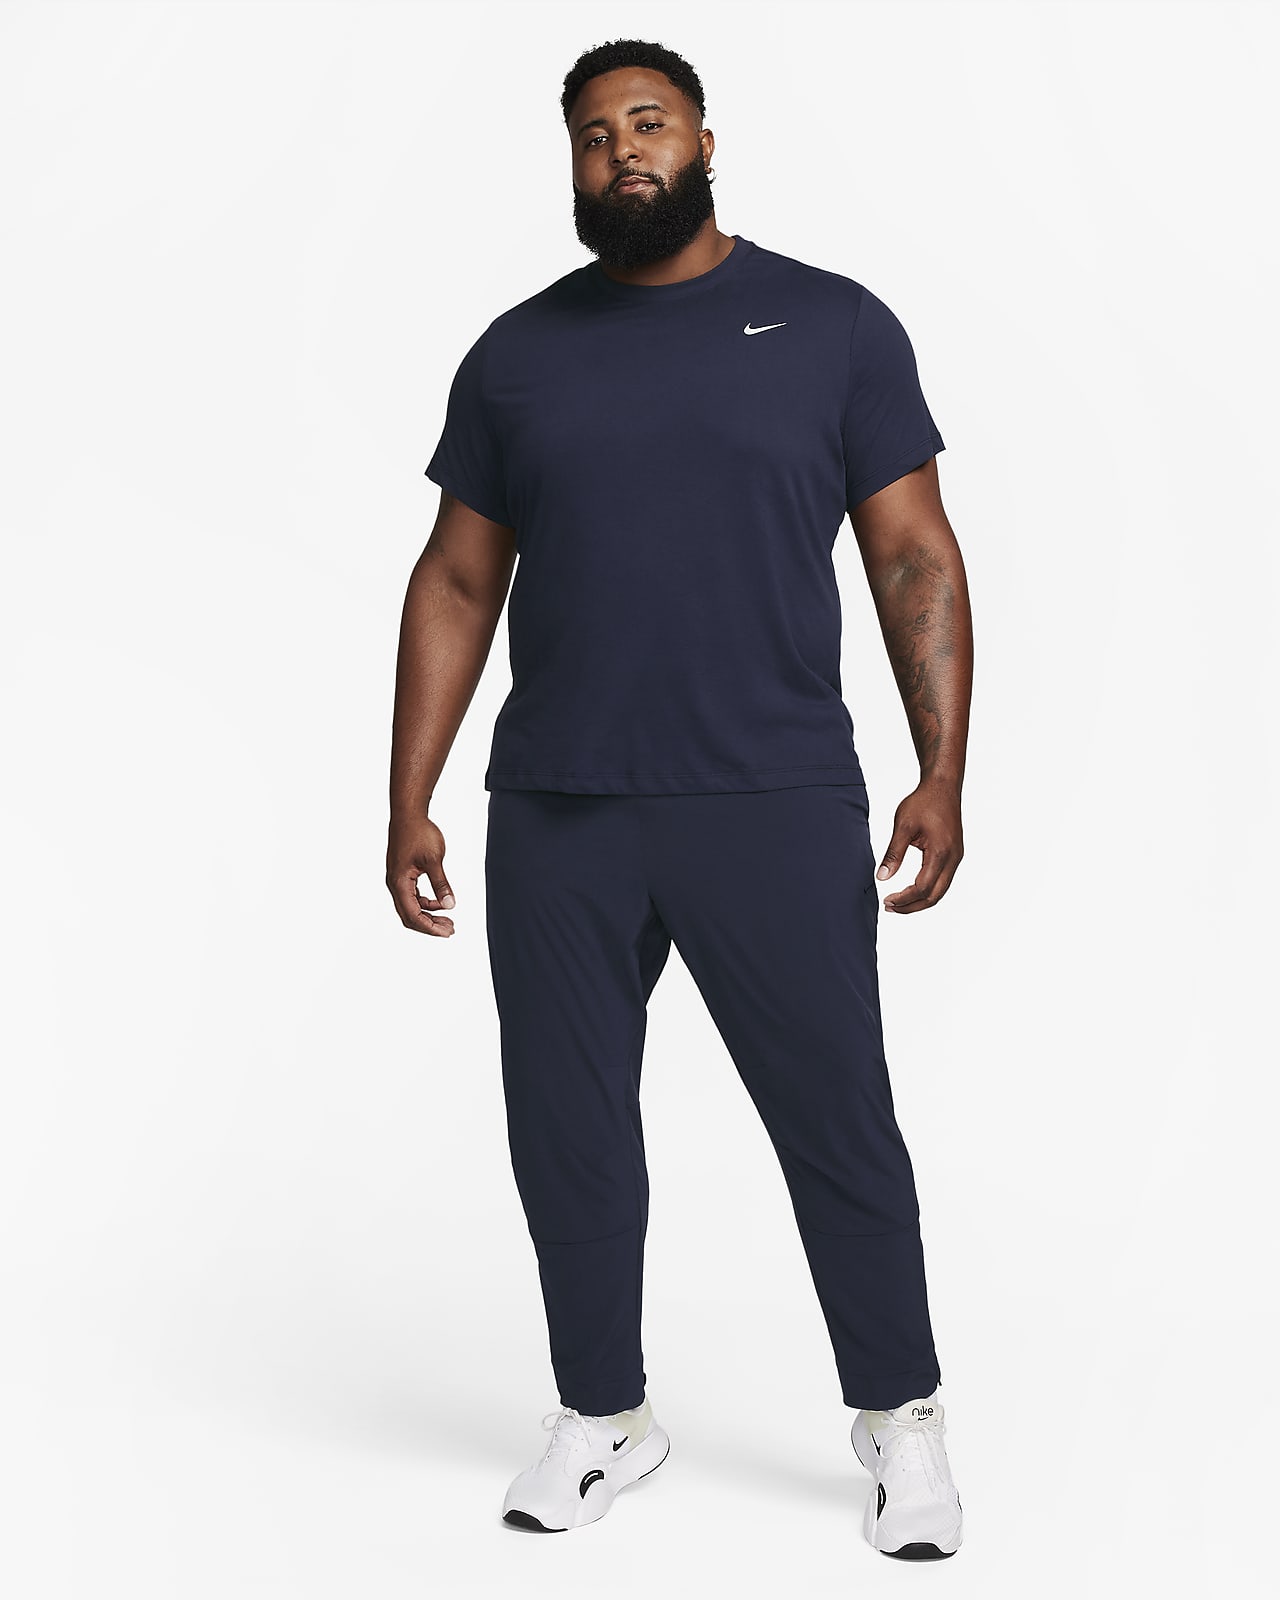 Nike Men's Dry Running Tank Top - Macy's